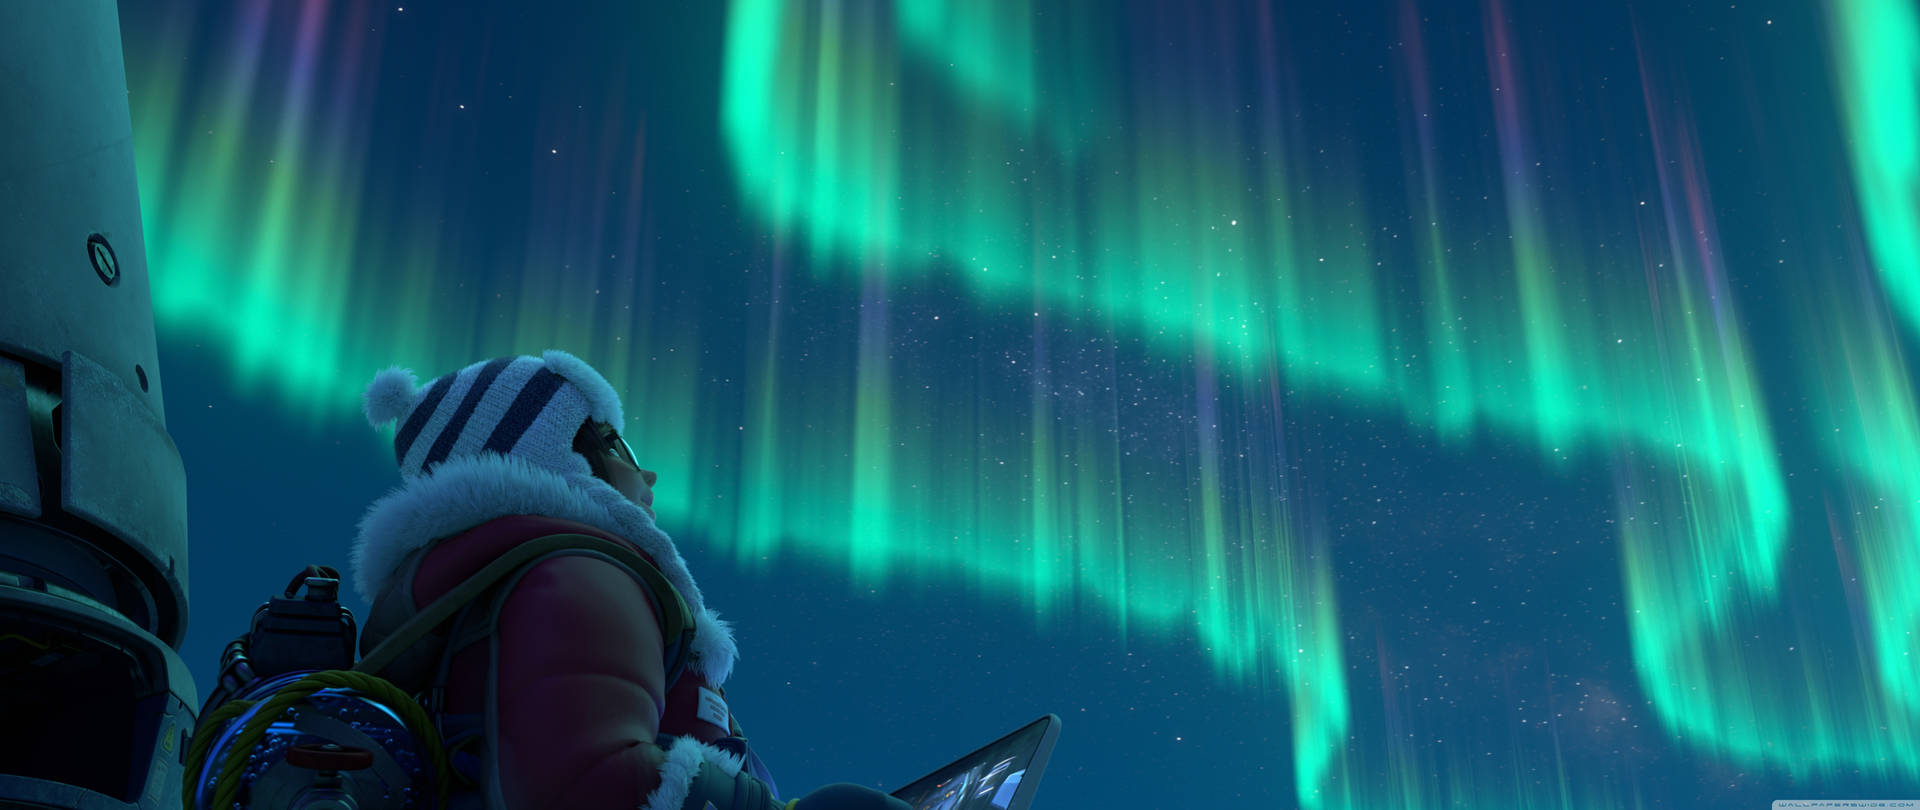 Overwatch 2 With Aurora Borealis Skyline Wallpaper